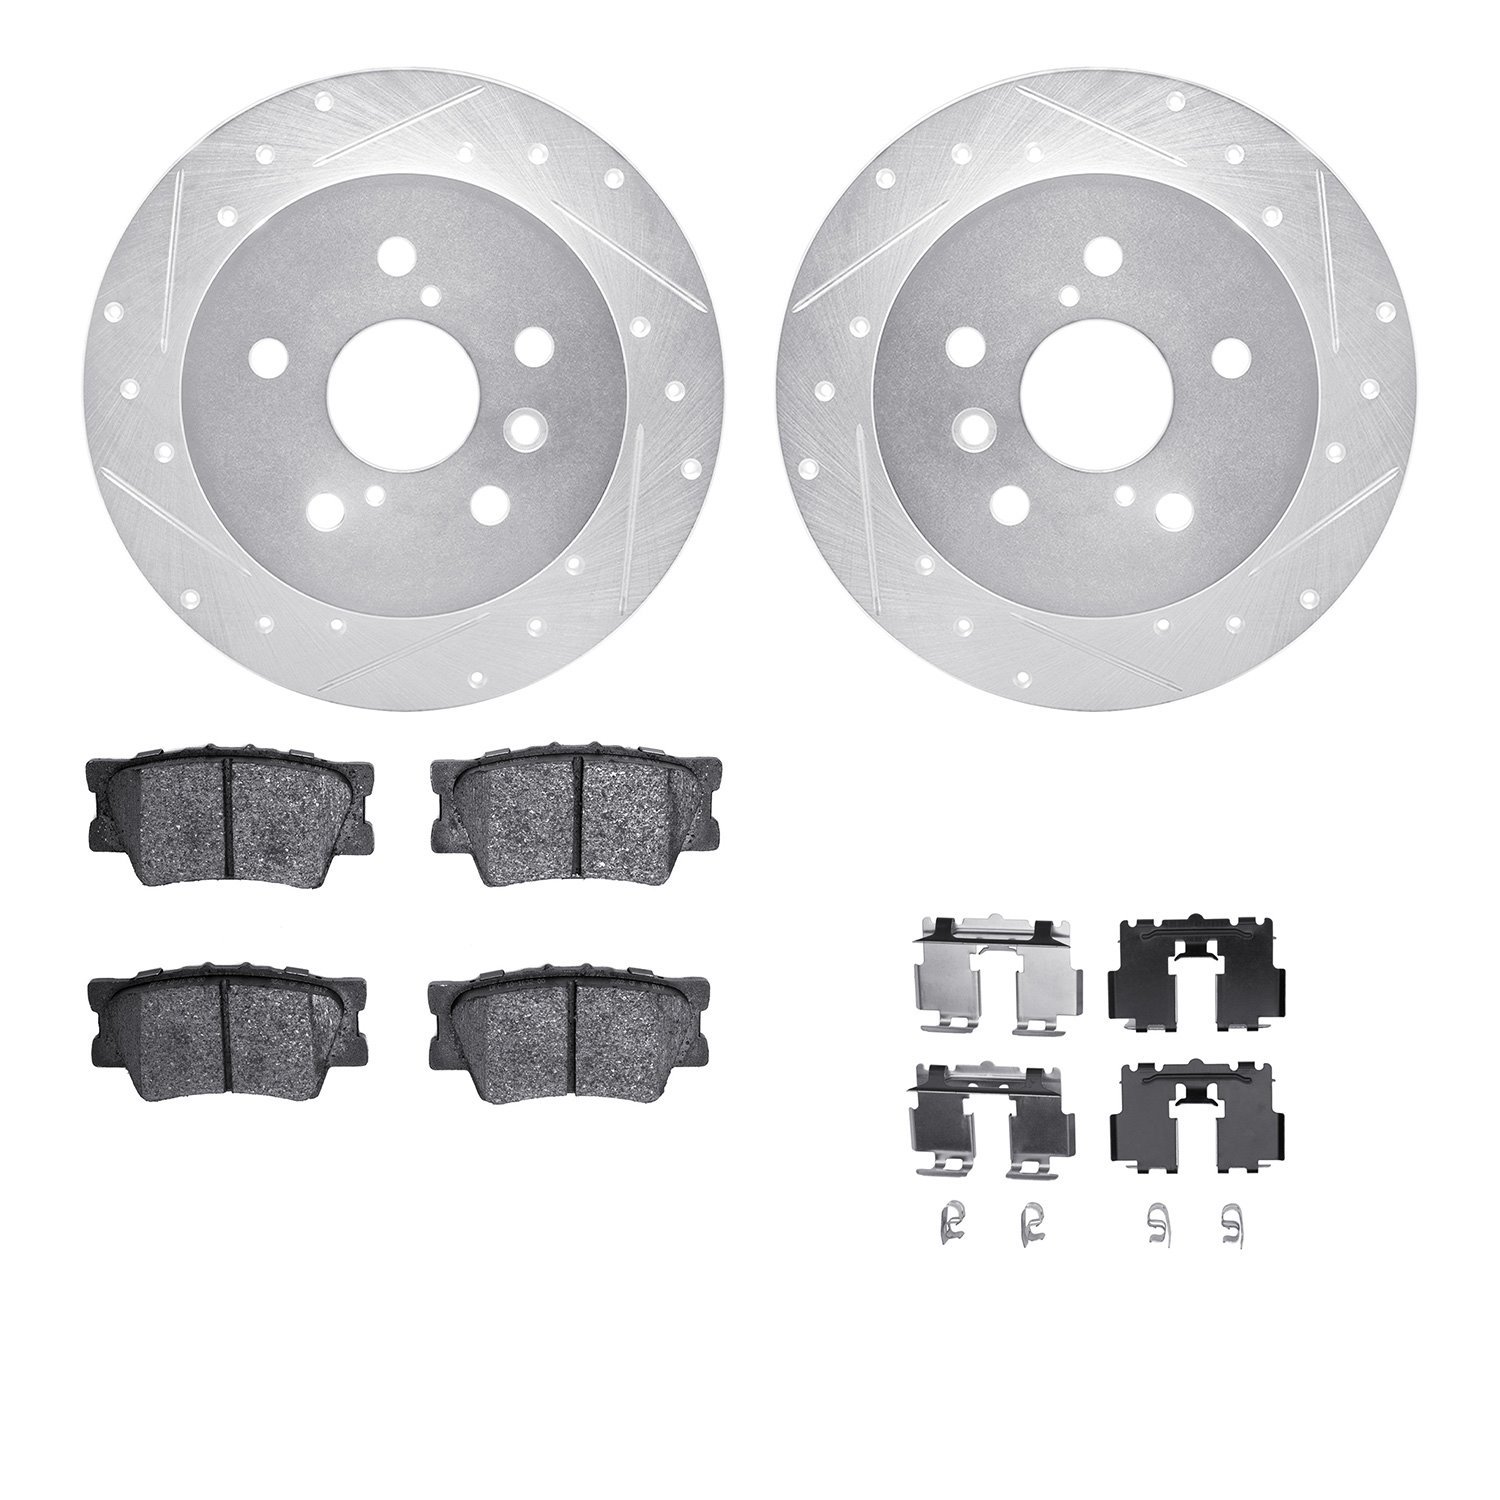 7512-76187 Drilled/Slotted Brake Rotors w/5000 Advanced Brake Pads Kit & Hardware [Silver], Fits Select Lexus/Toyota/Scion, Posi